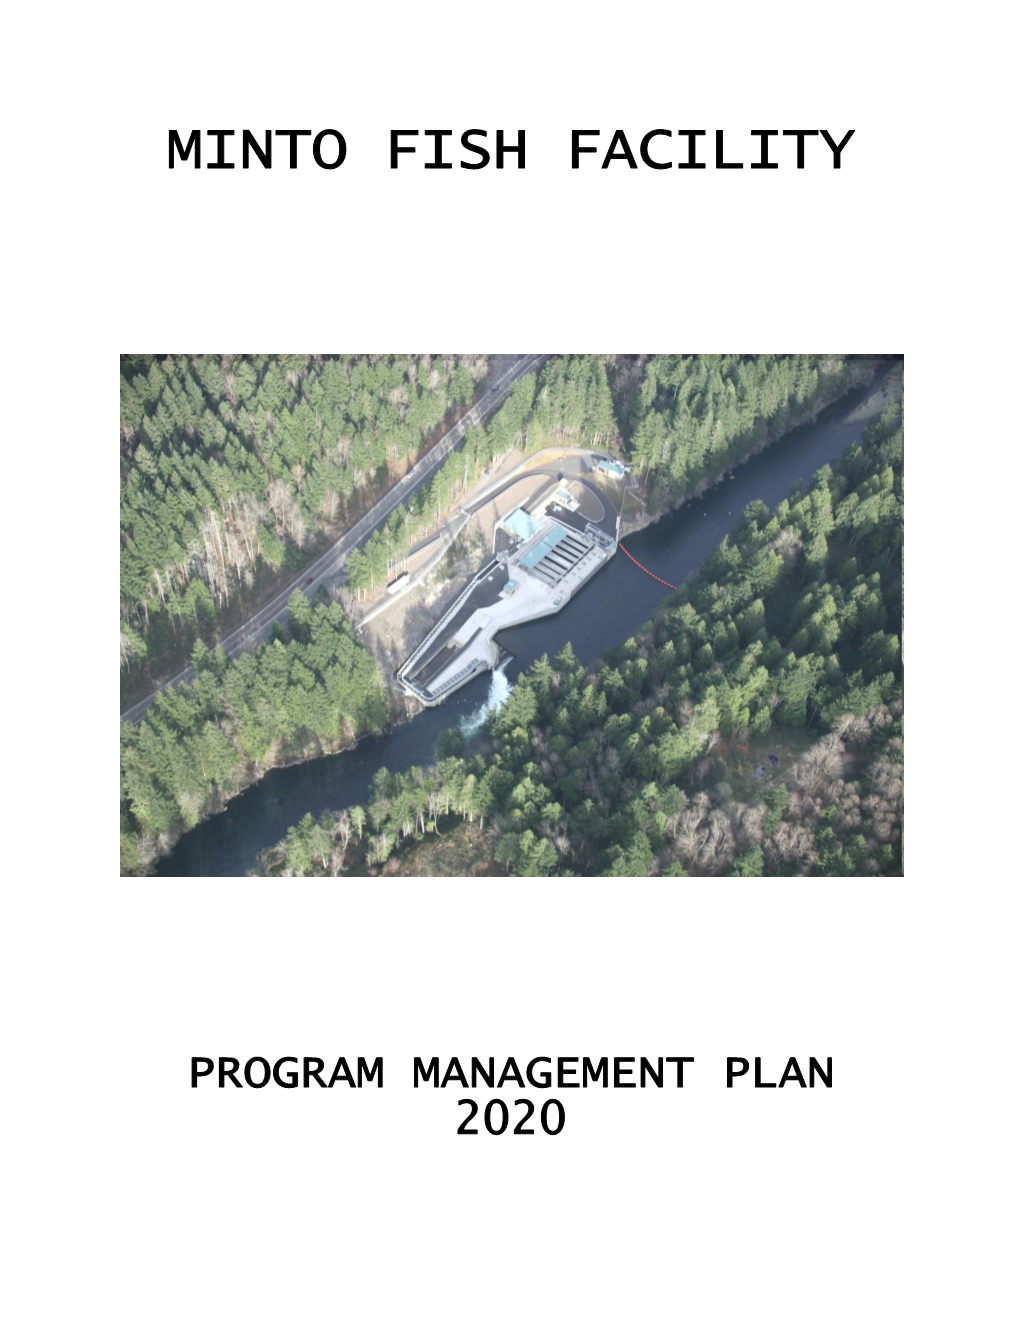 Minto Fish Facility